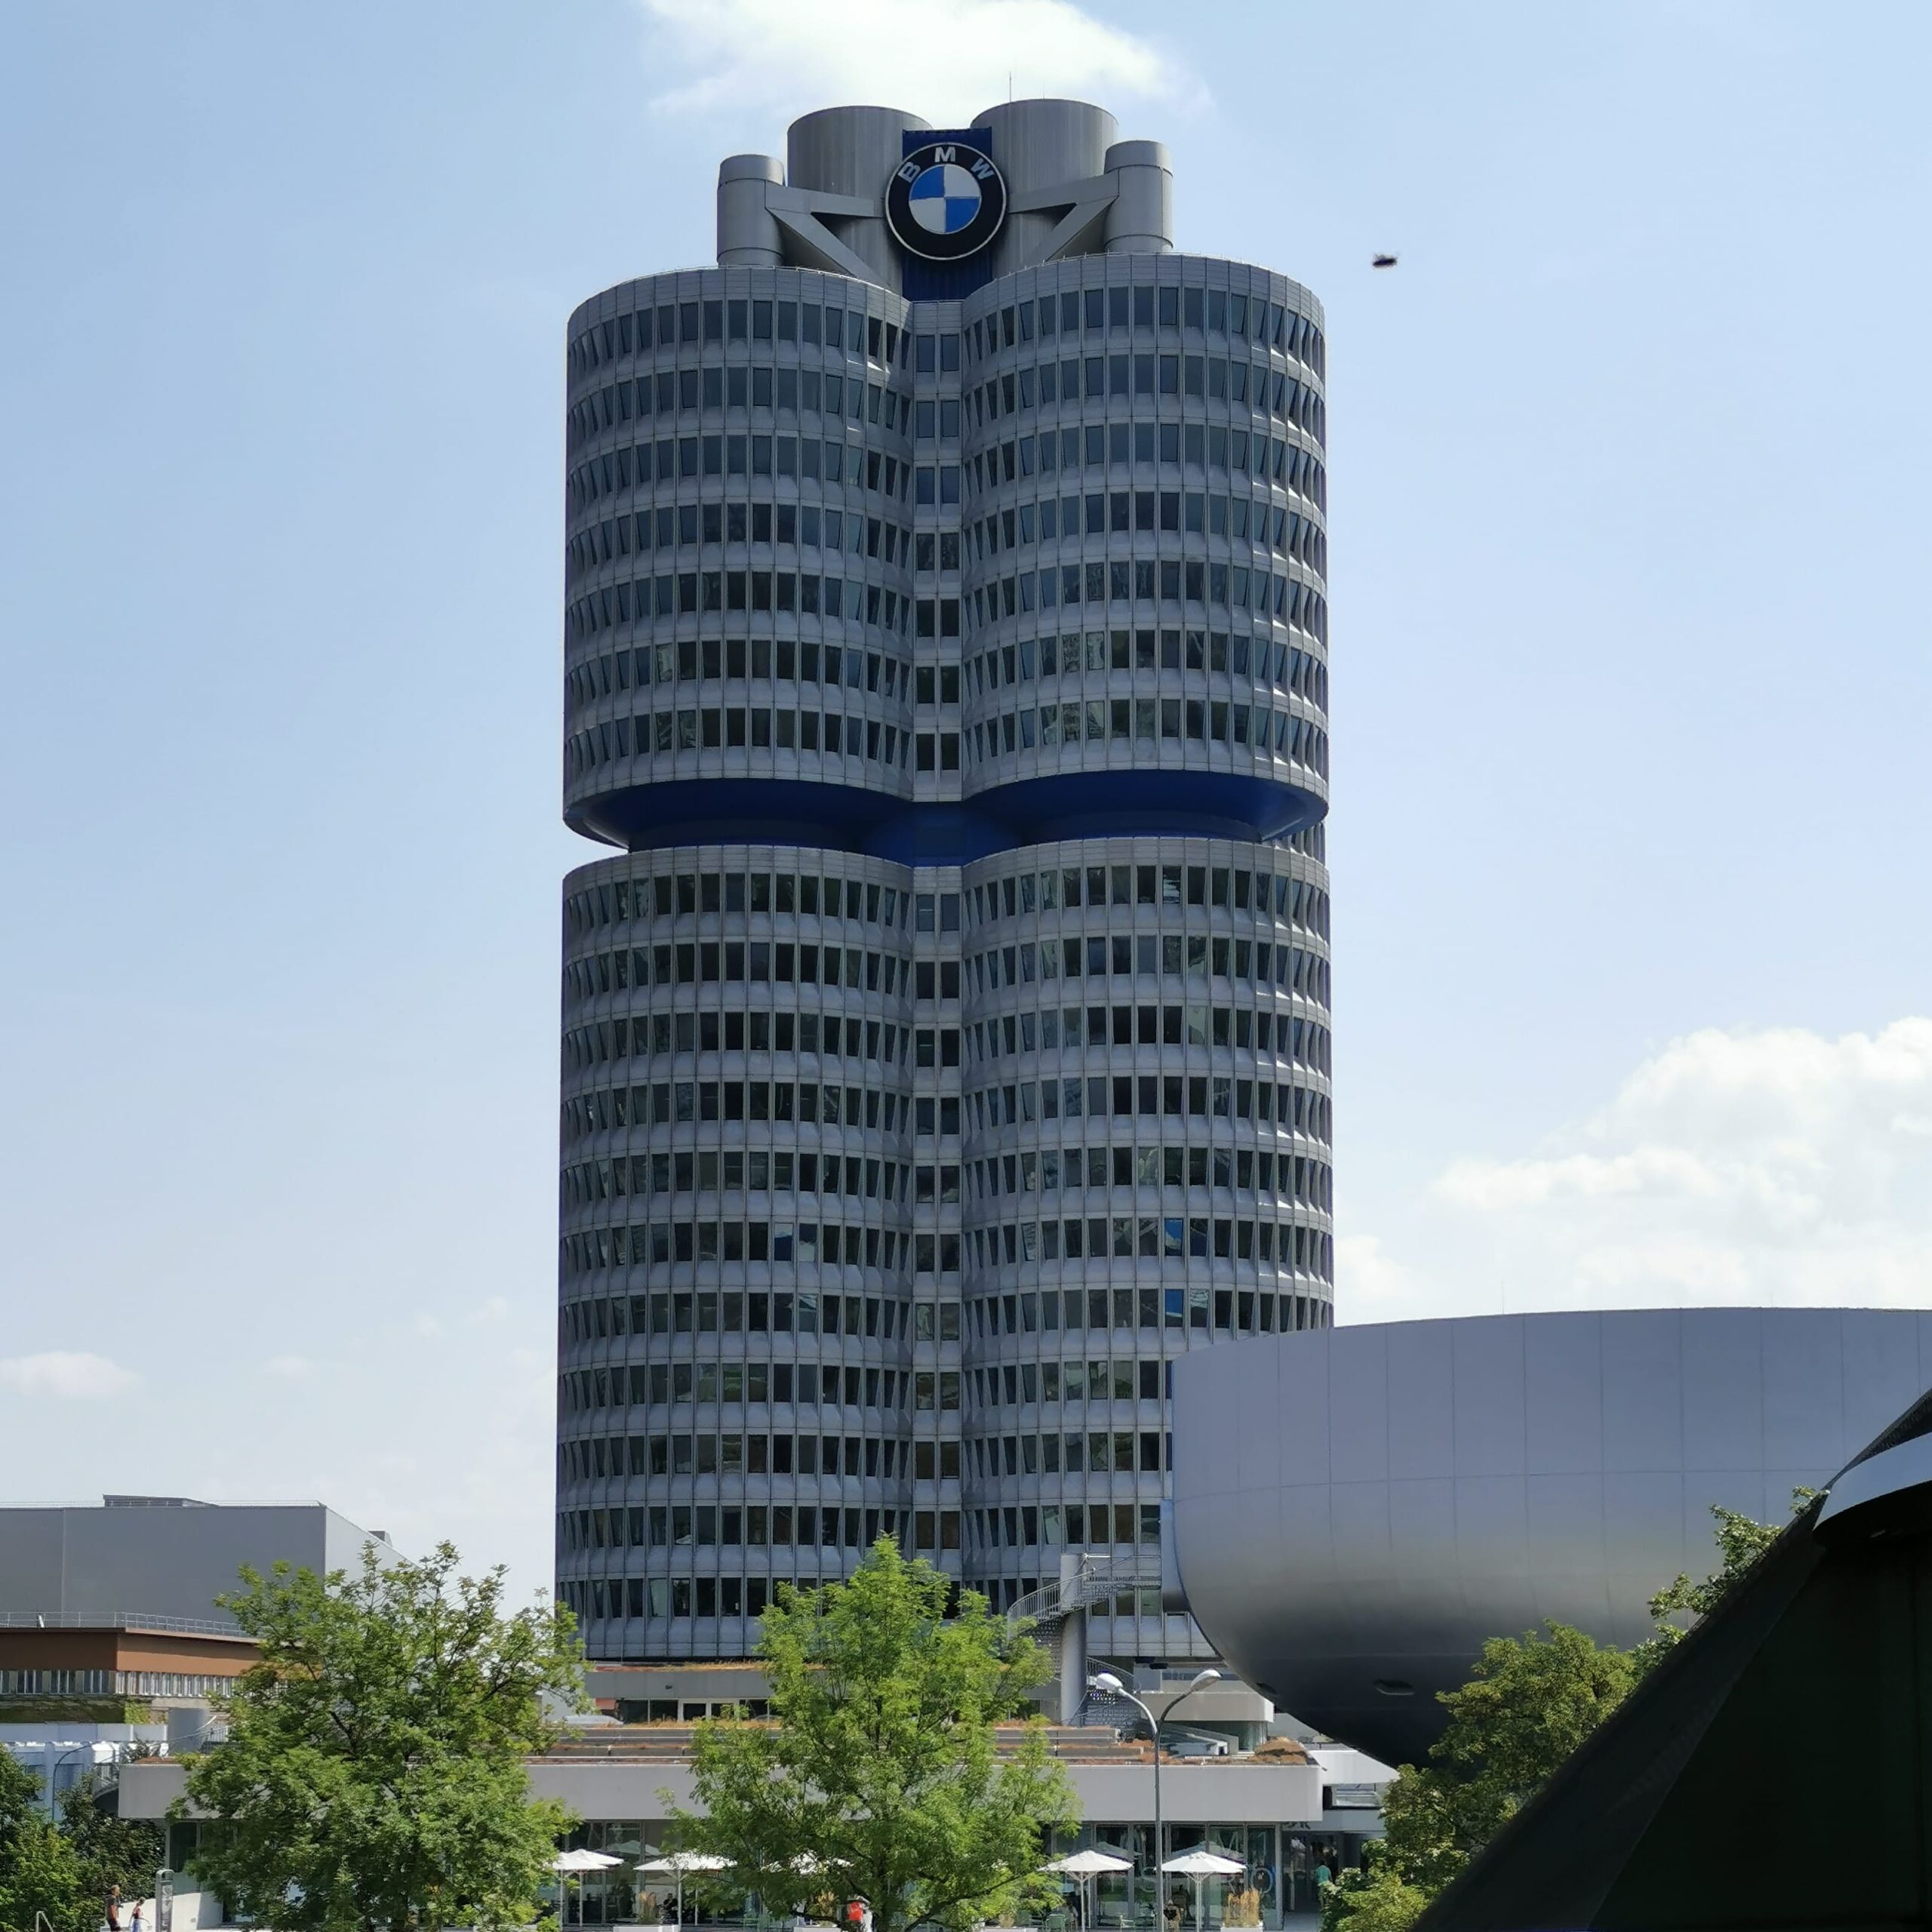 BMW i5 review NZ